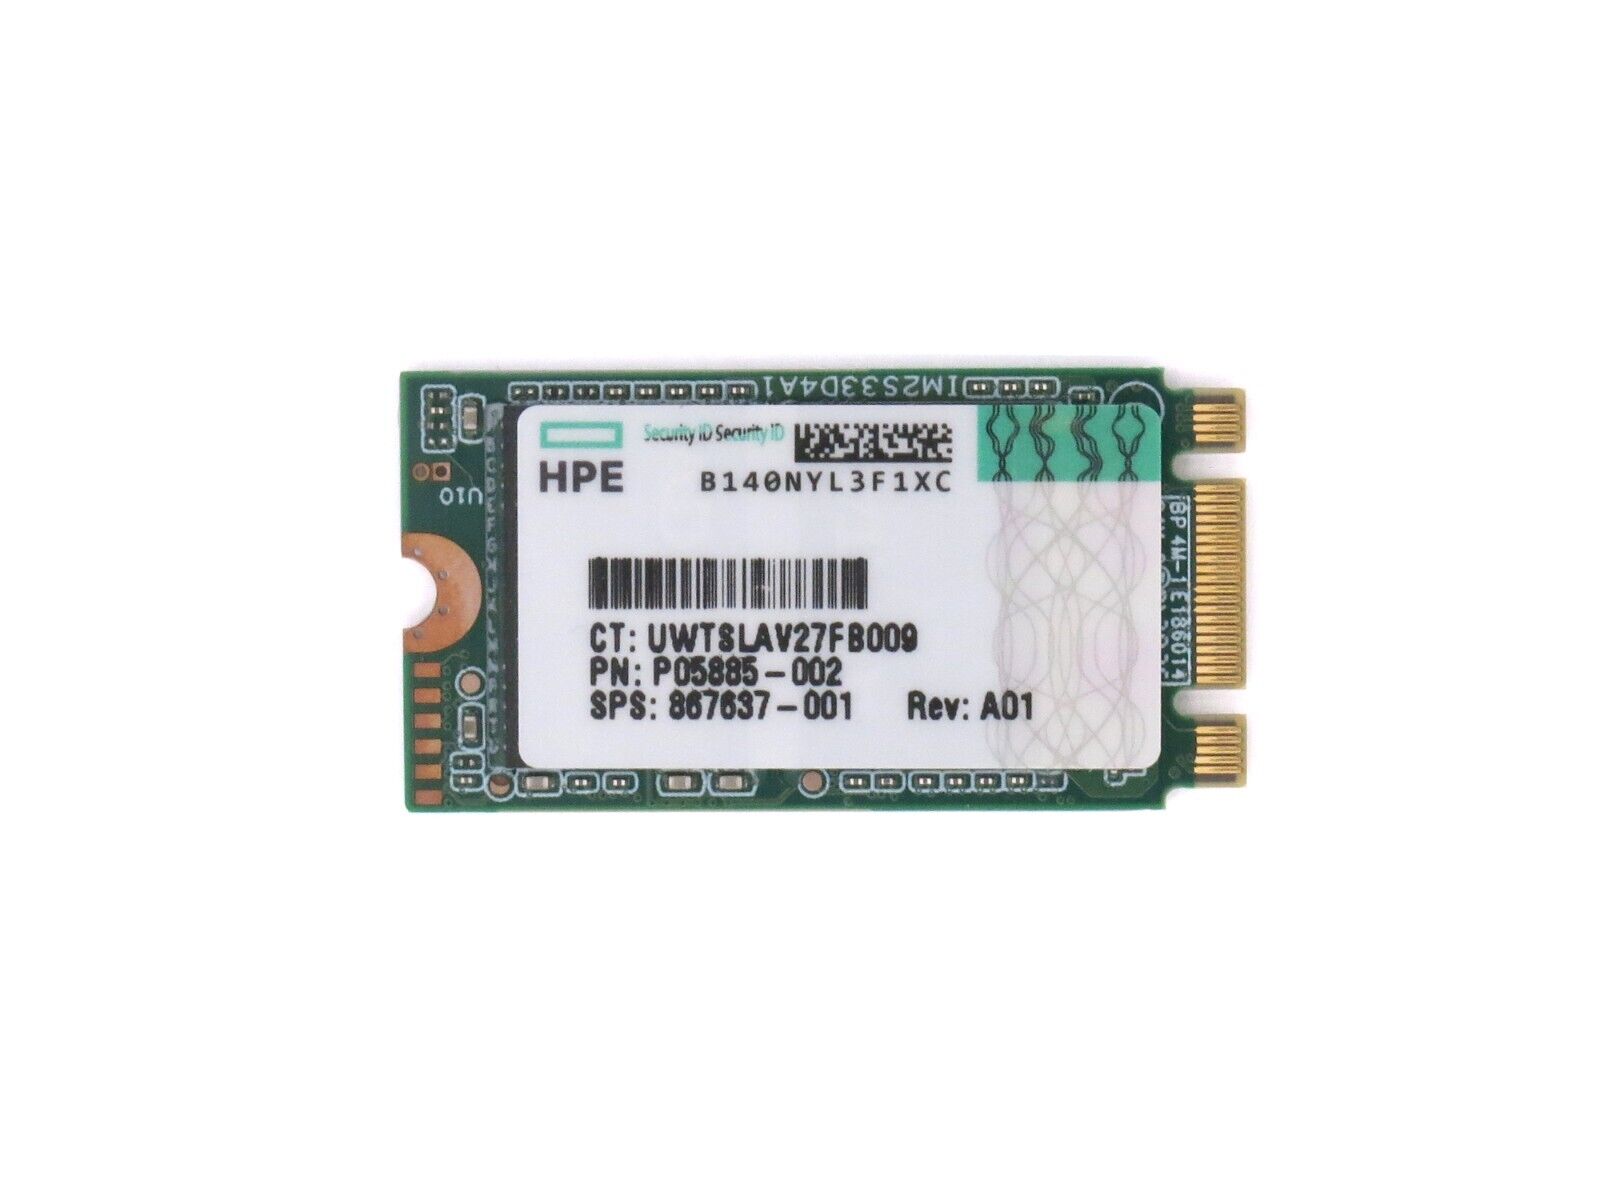 HPE 867637-001 ADATA 240GB SPS-DRV SSD M.2 2242 SATA 6G MLC P05885-002